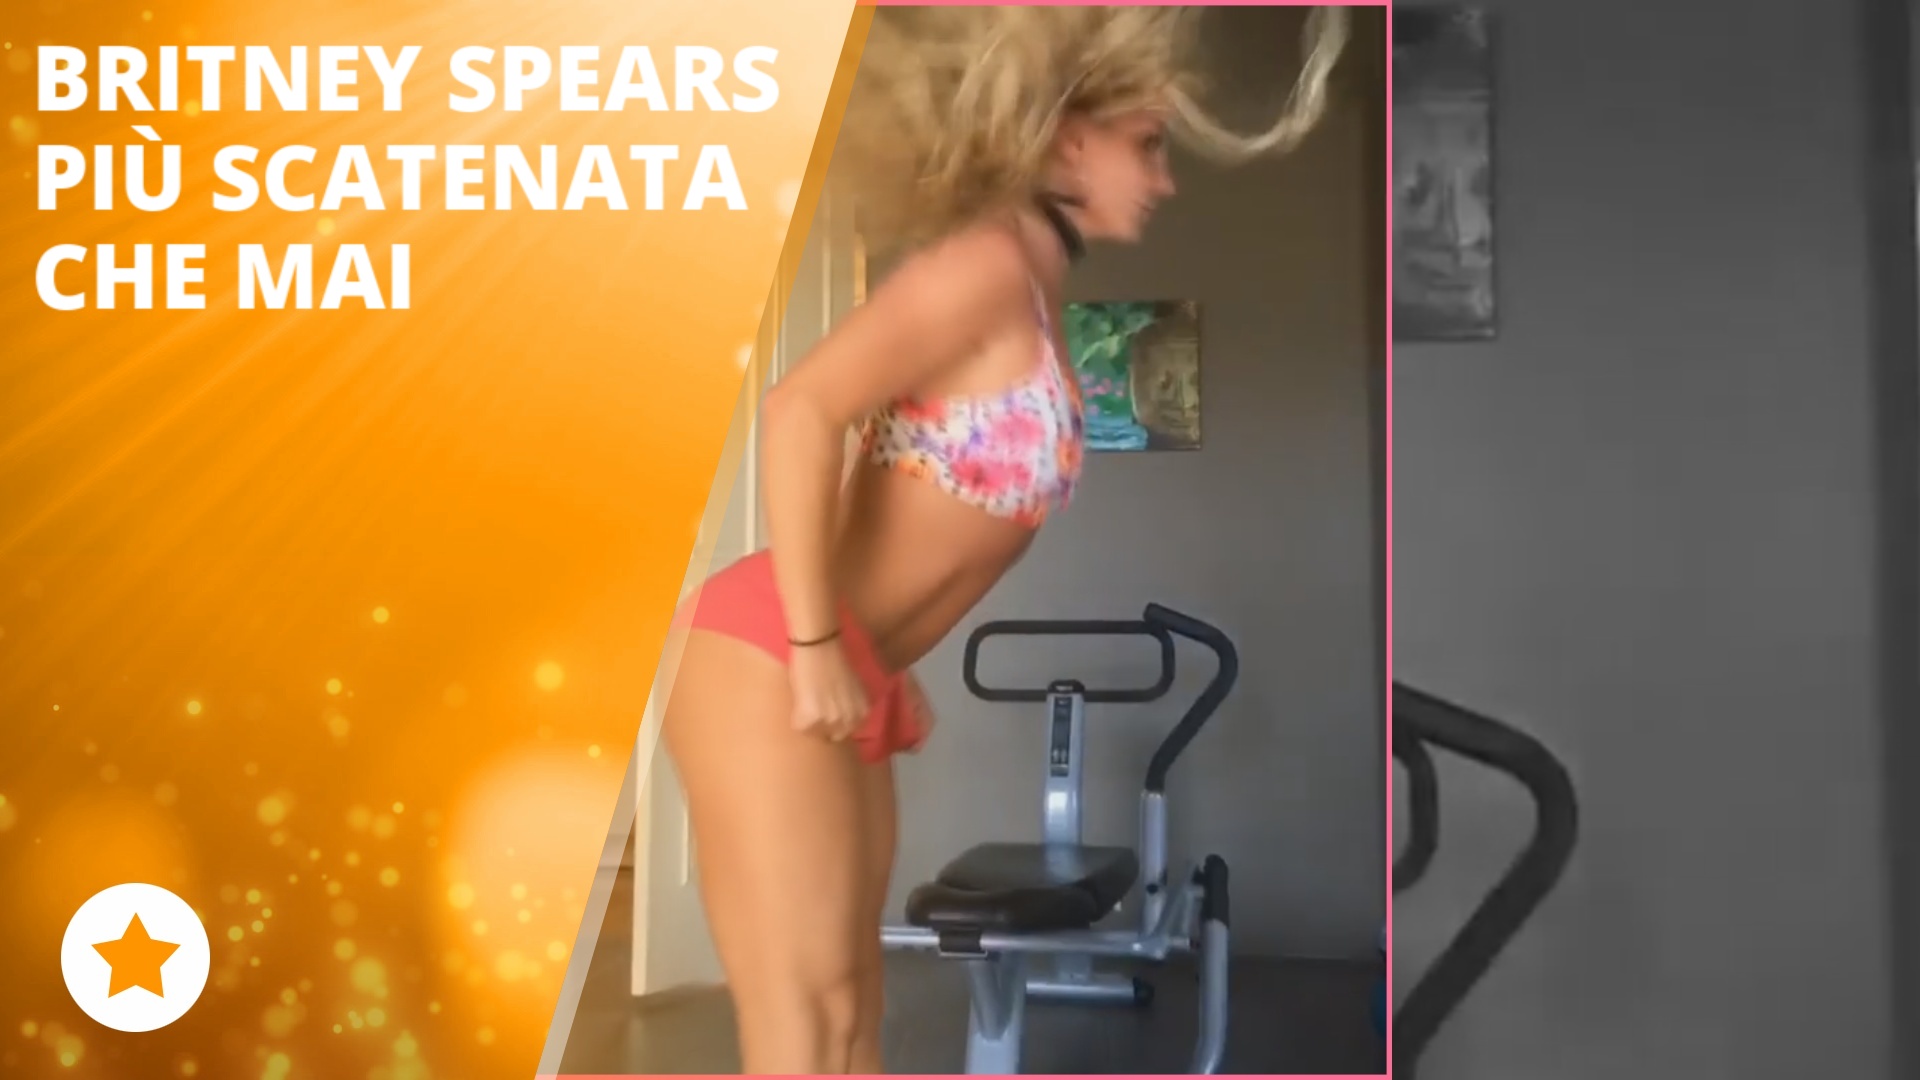 Britney Spears si scatena su Instagram